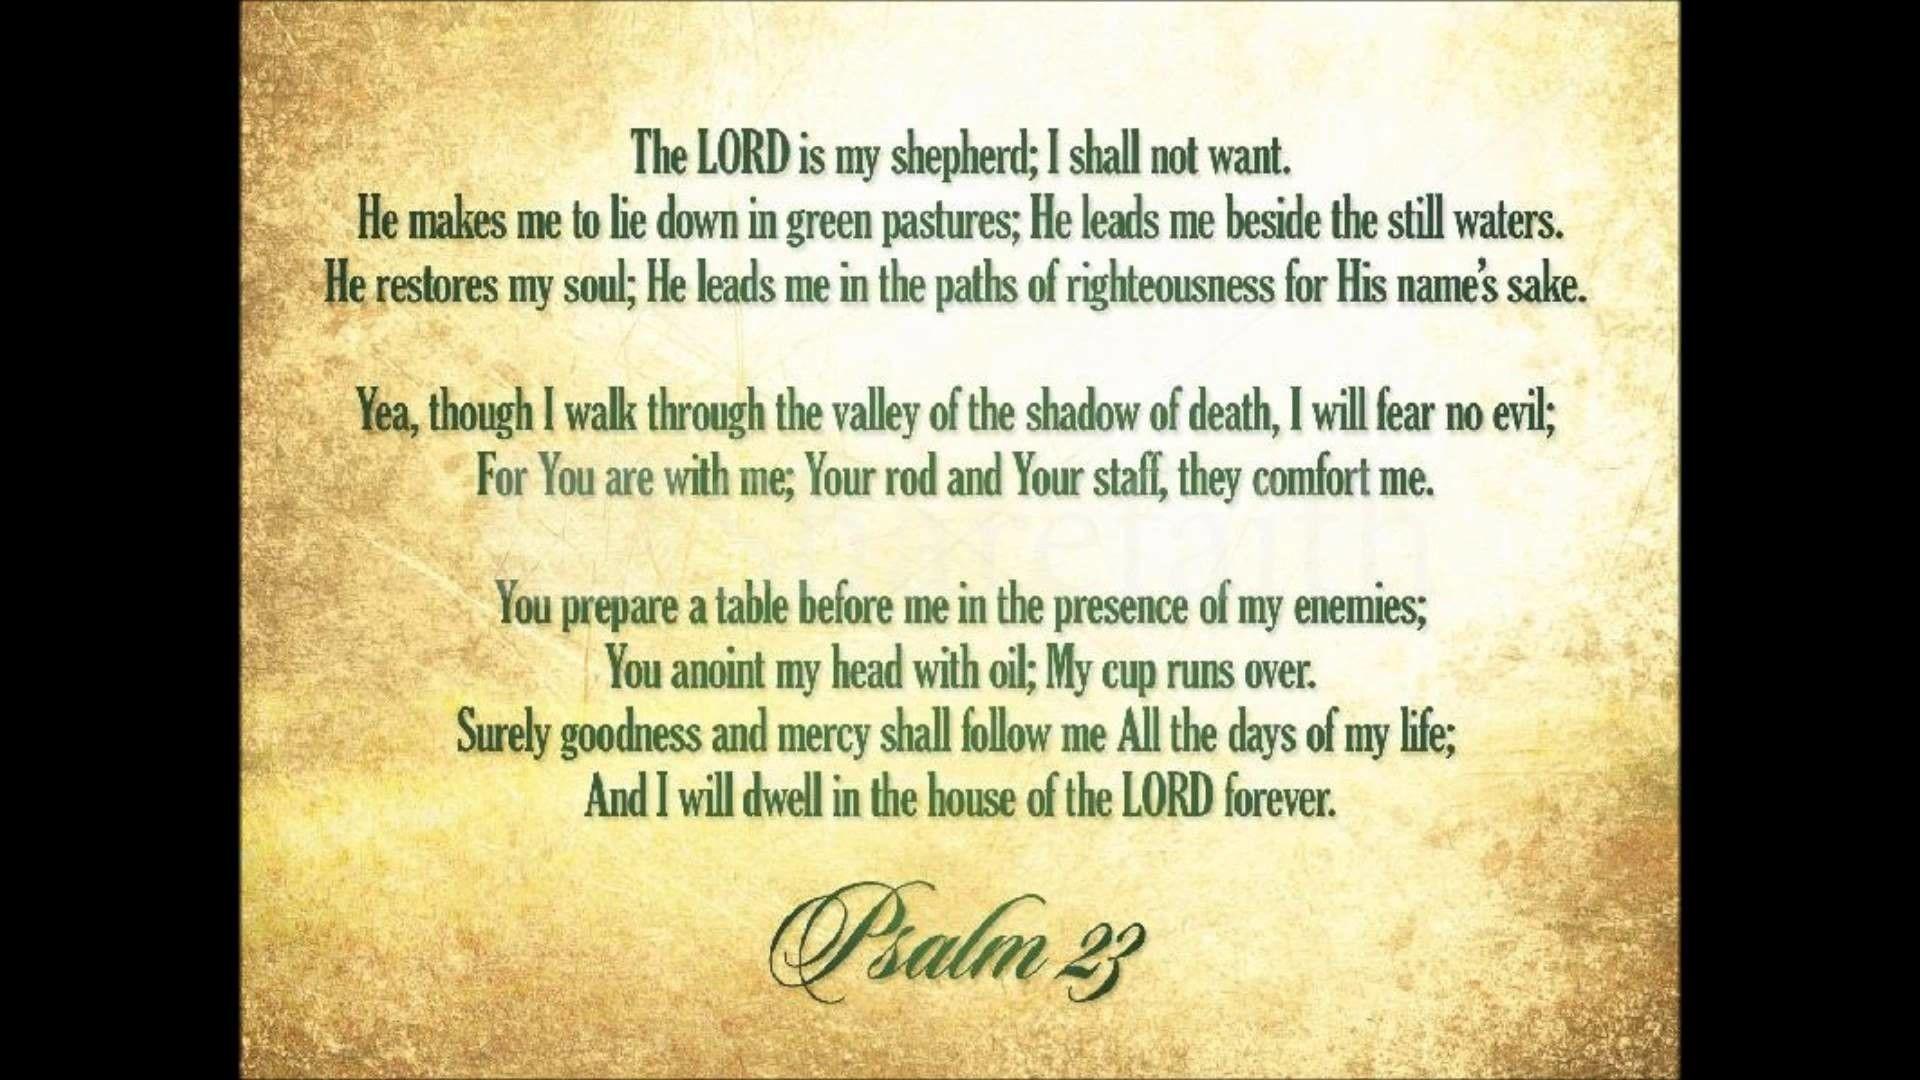 Psalm 23 Wallpaper